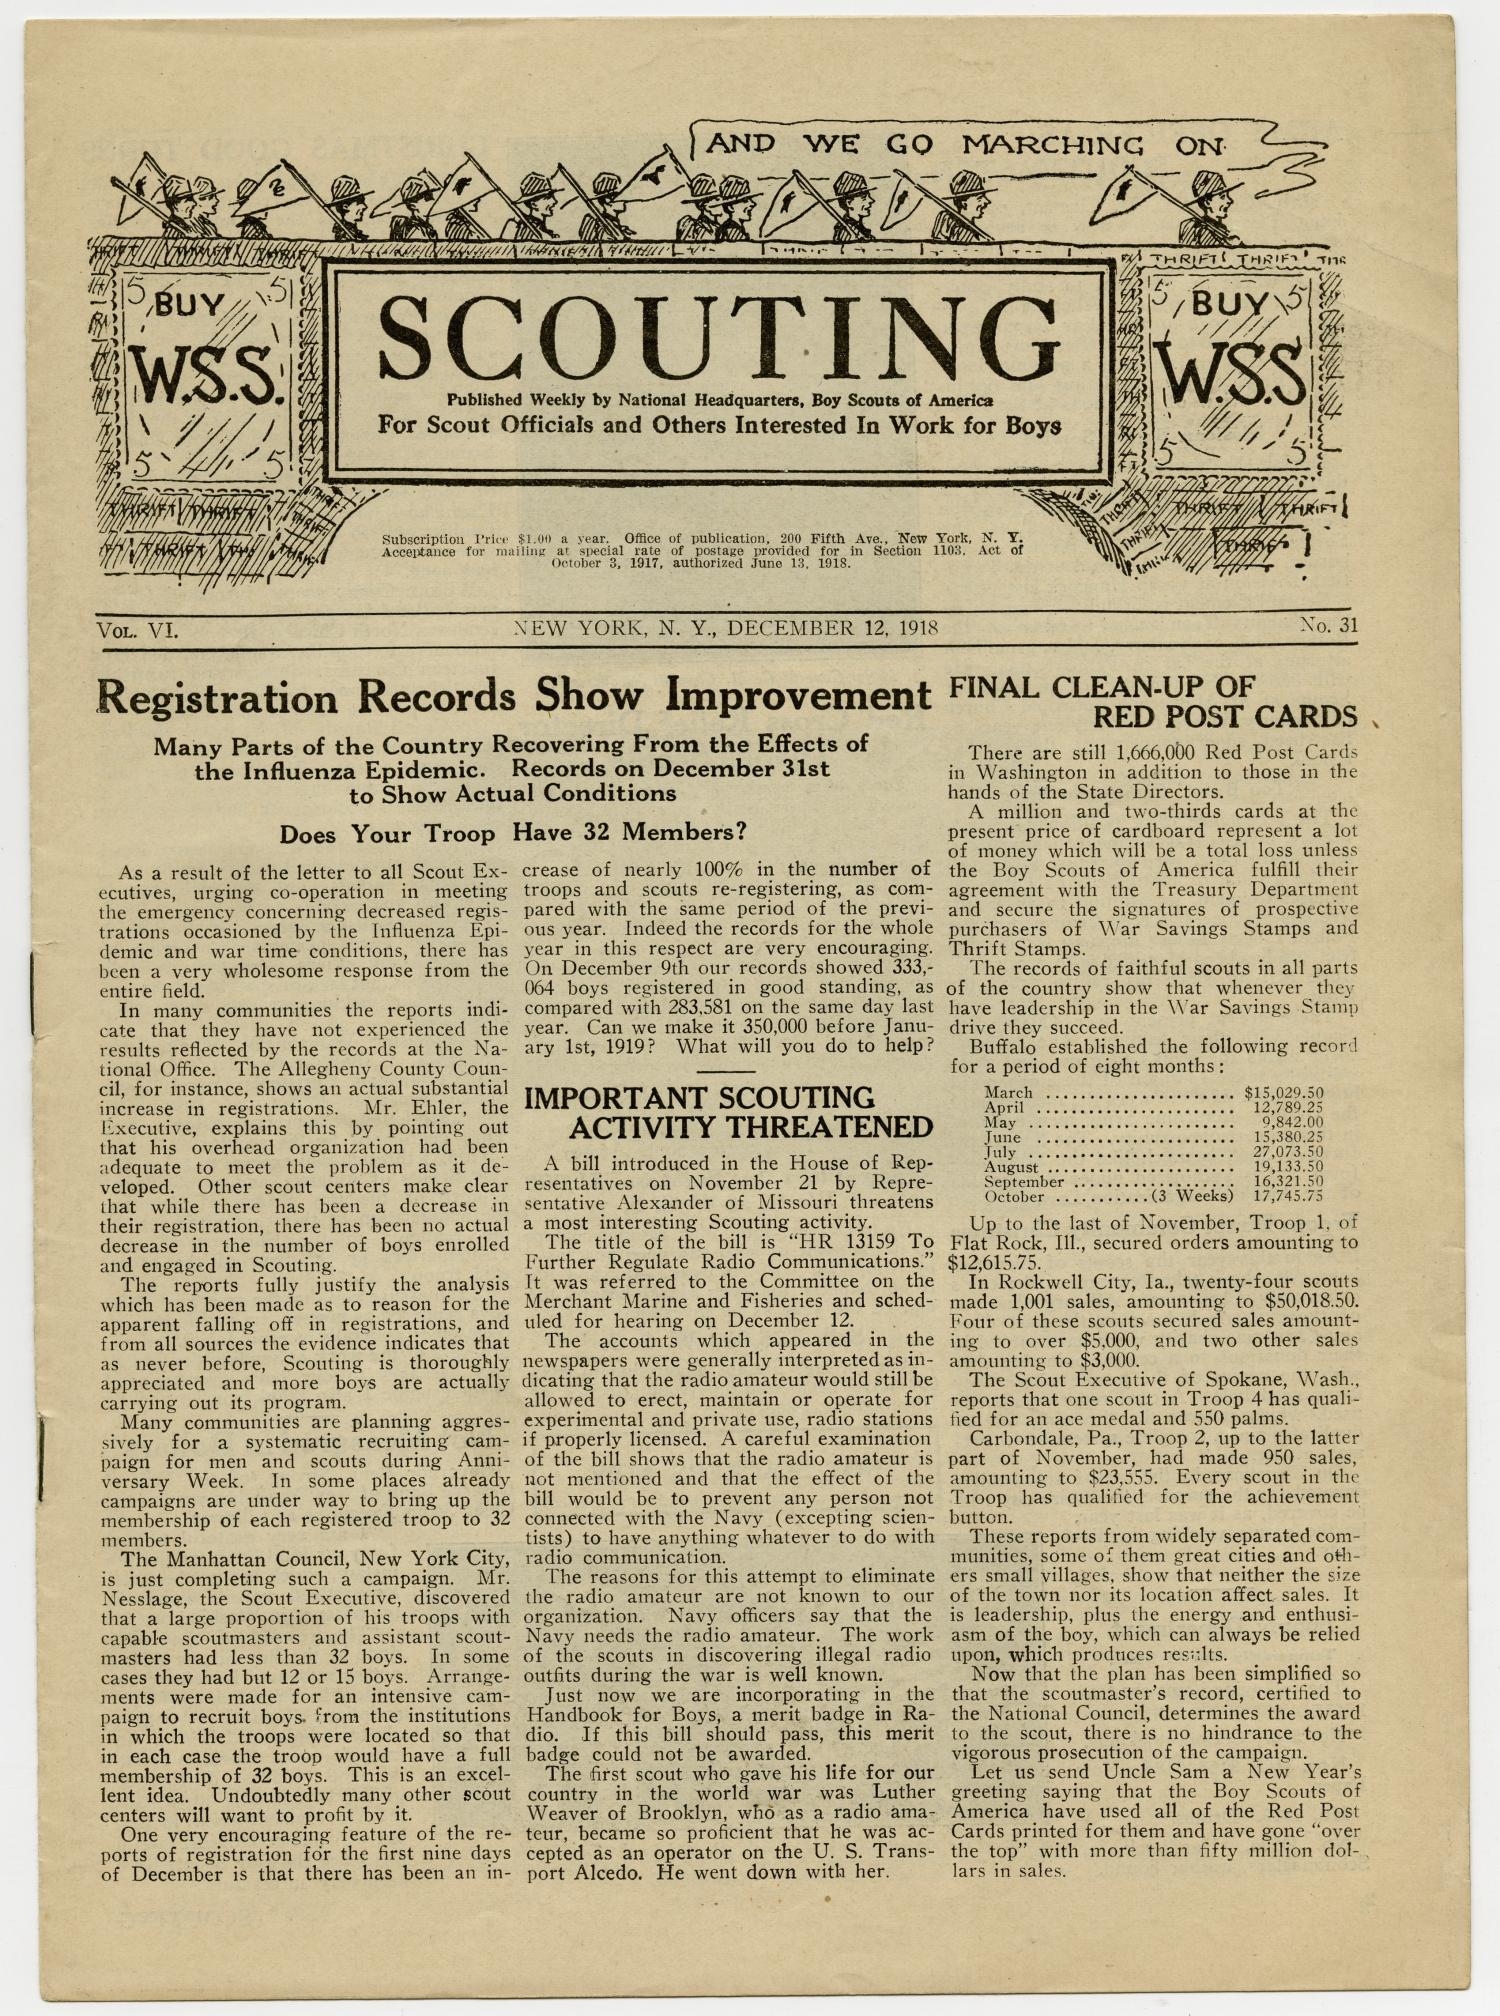 Scouting, Volume 6, Number 31, December 12, 1918
                                                
                                                    1
                                                